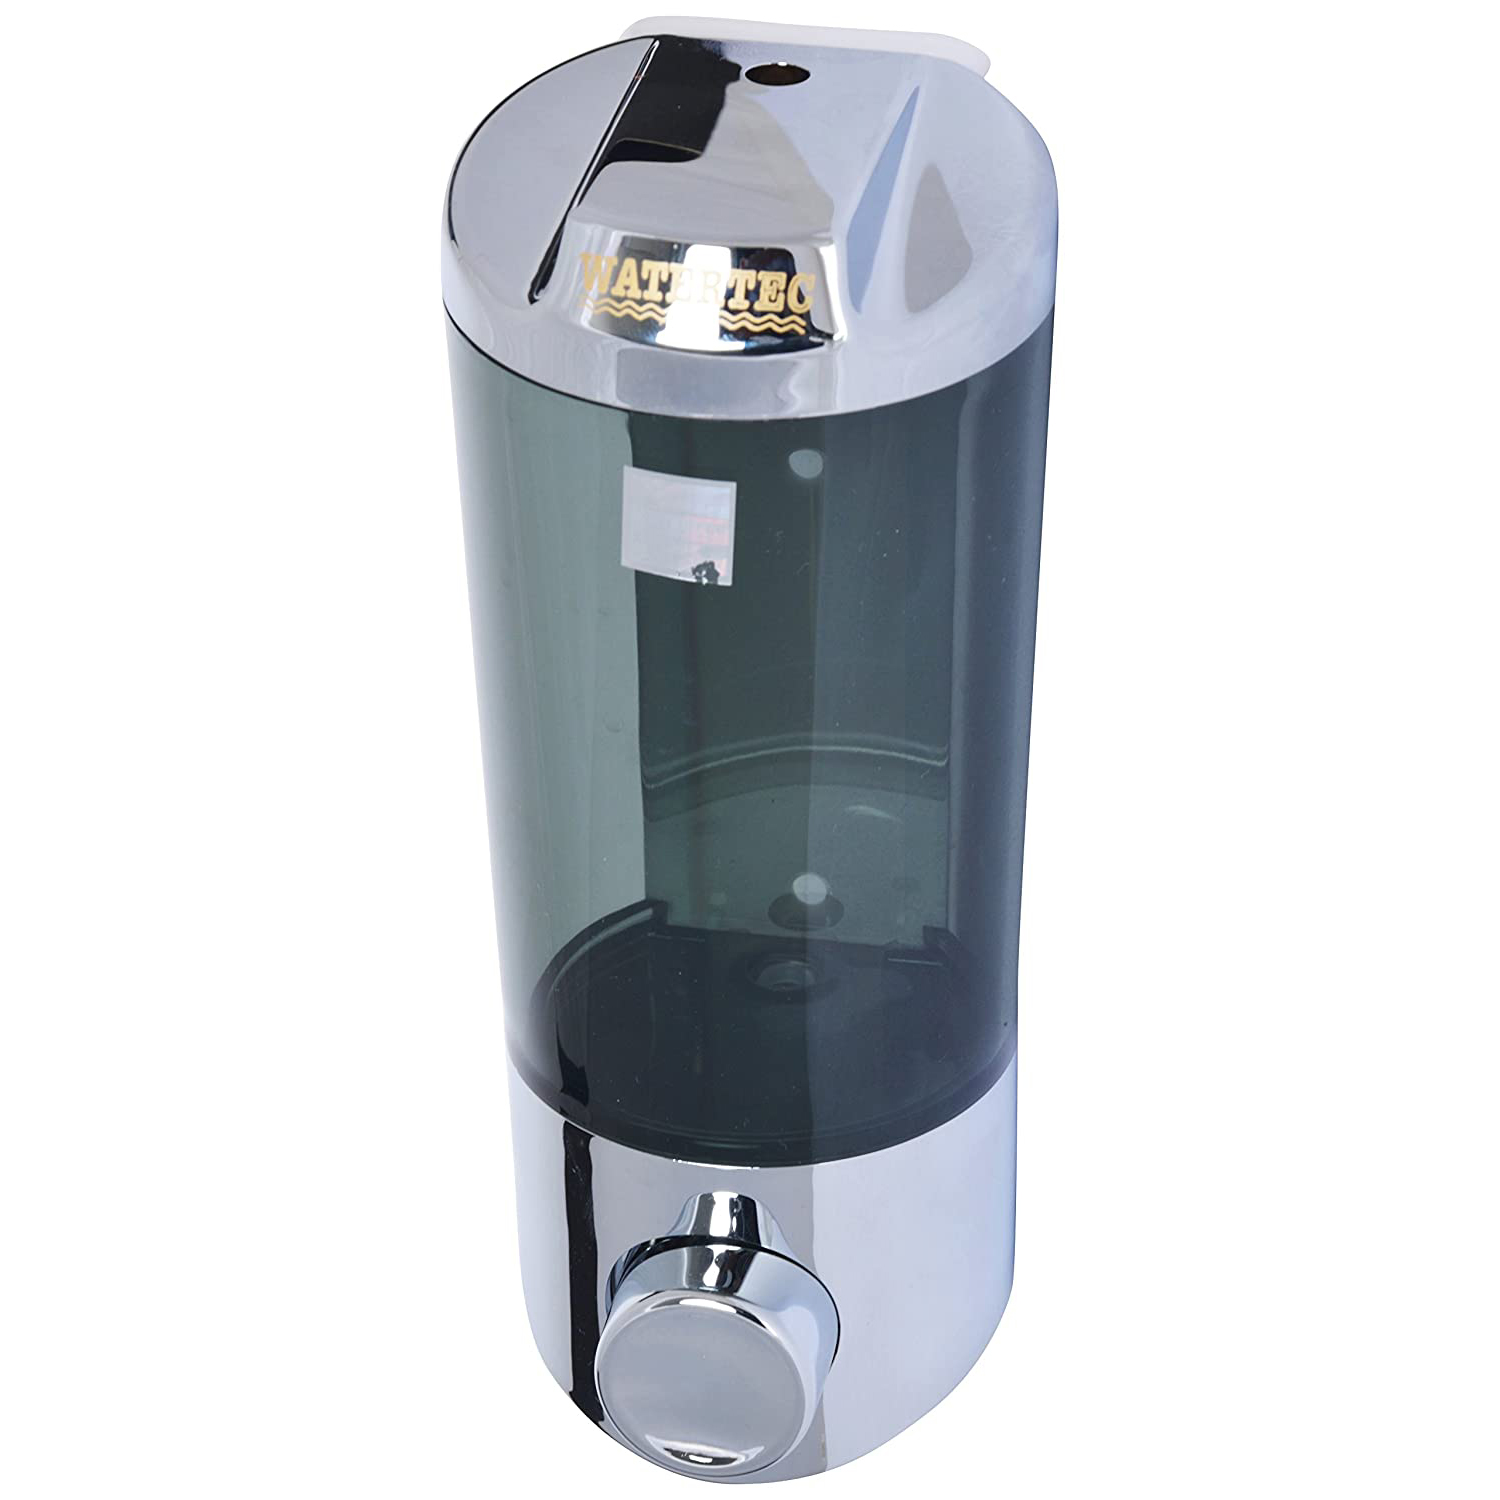 WATERTEC Polymer Liquid Soap Dispenser (Charcoal)